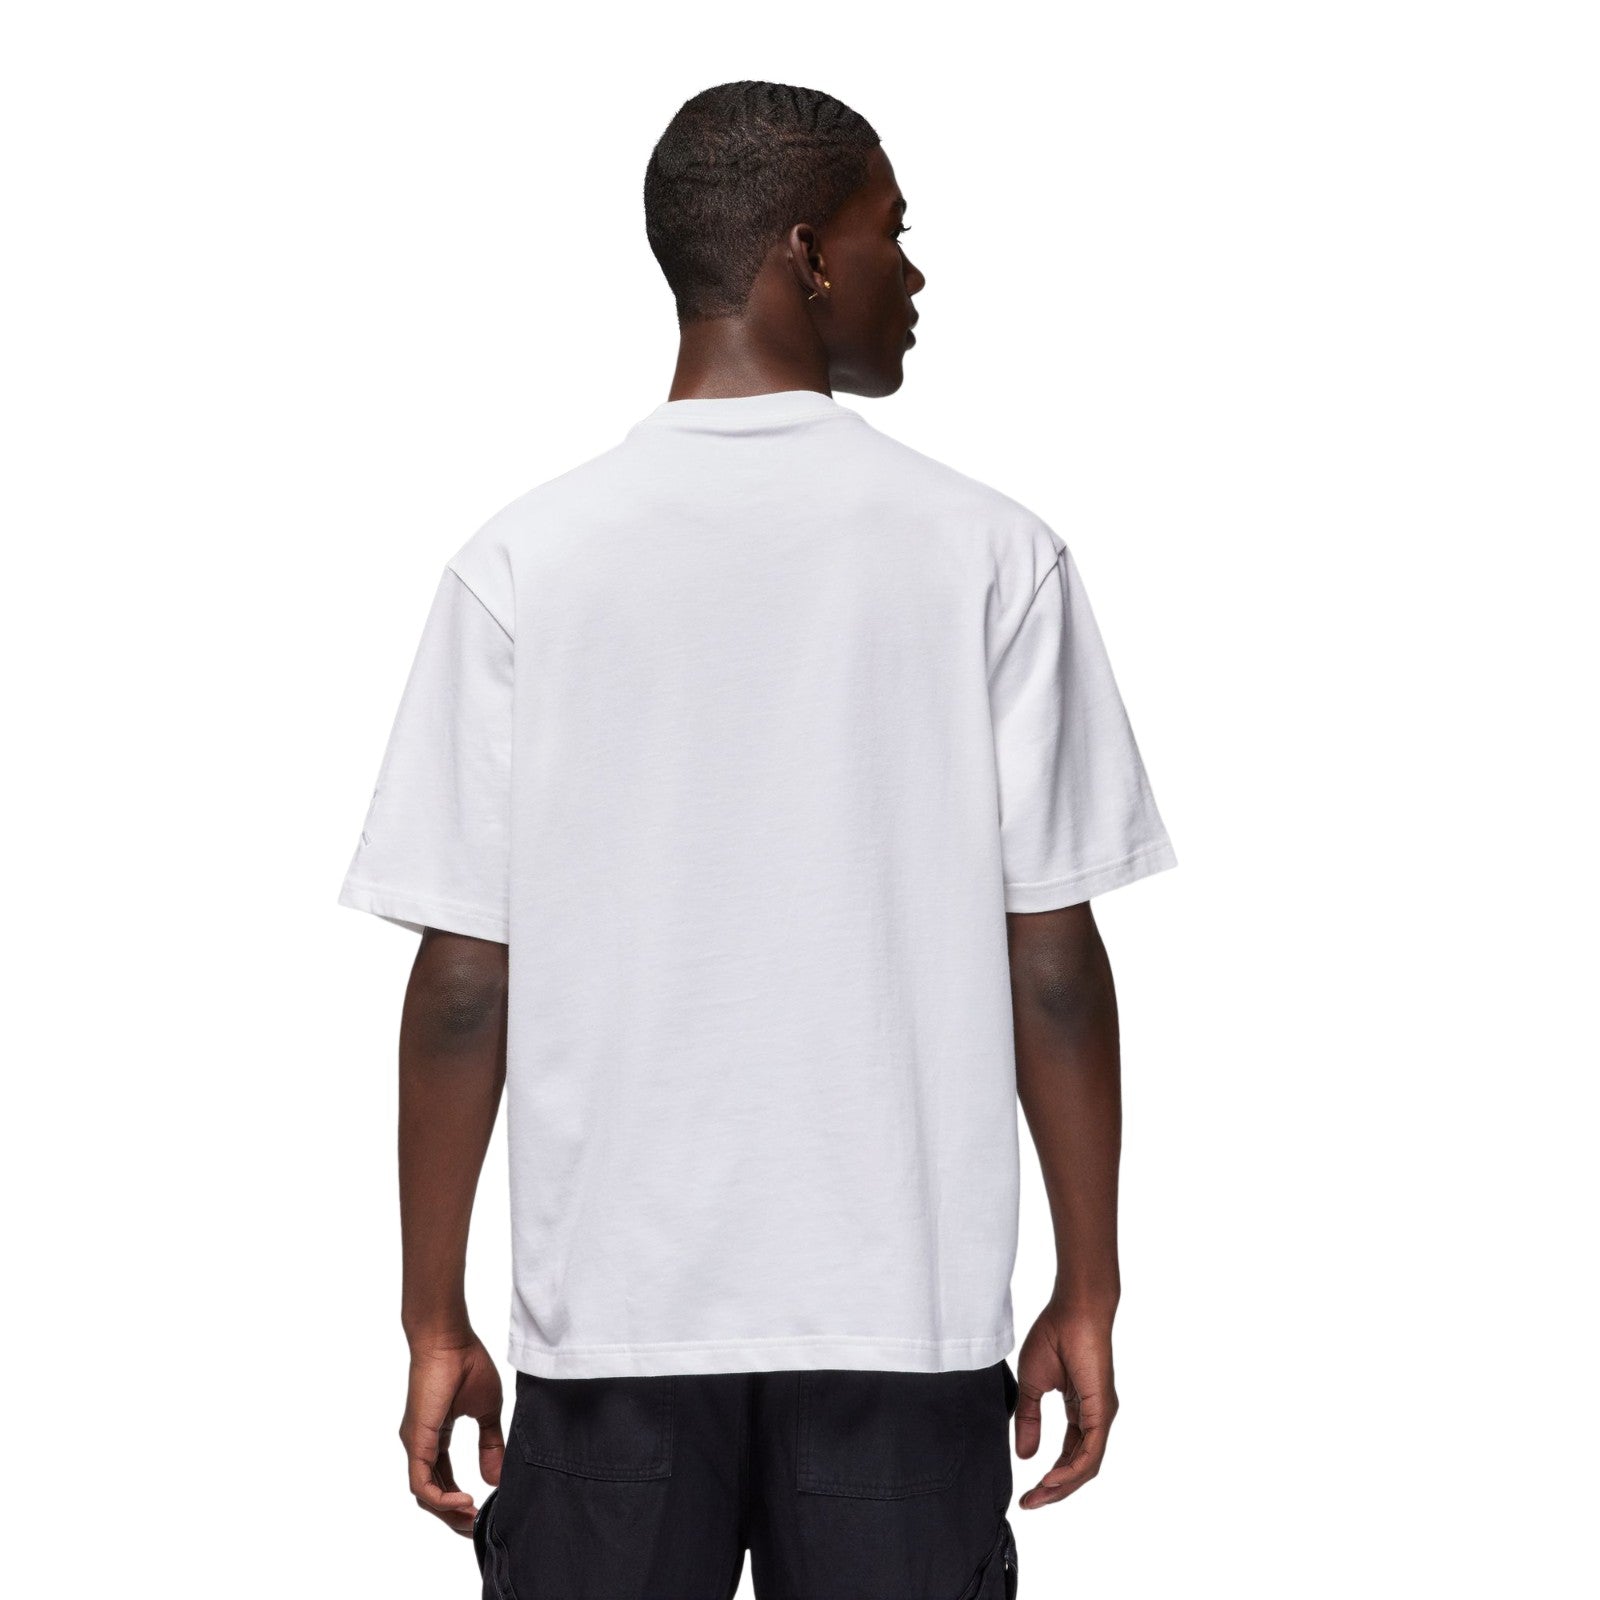  Jordan Brand Men's T-Shirt